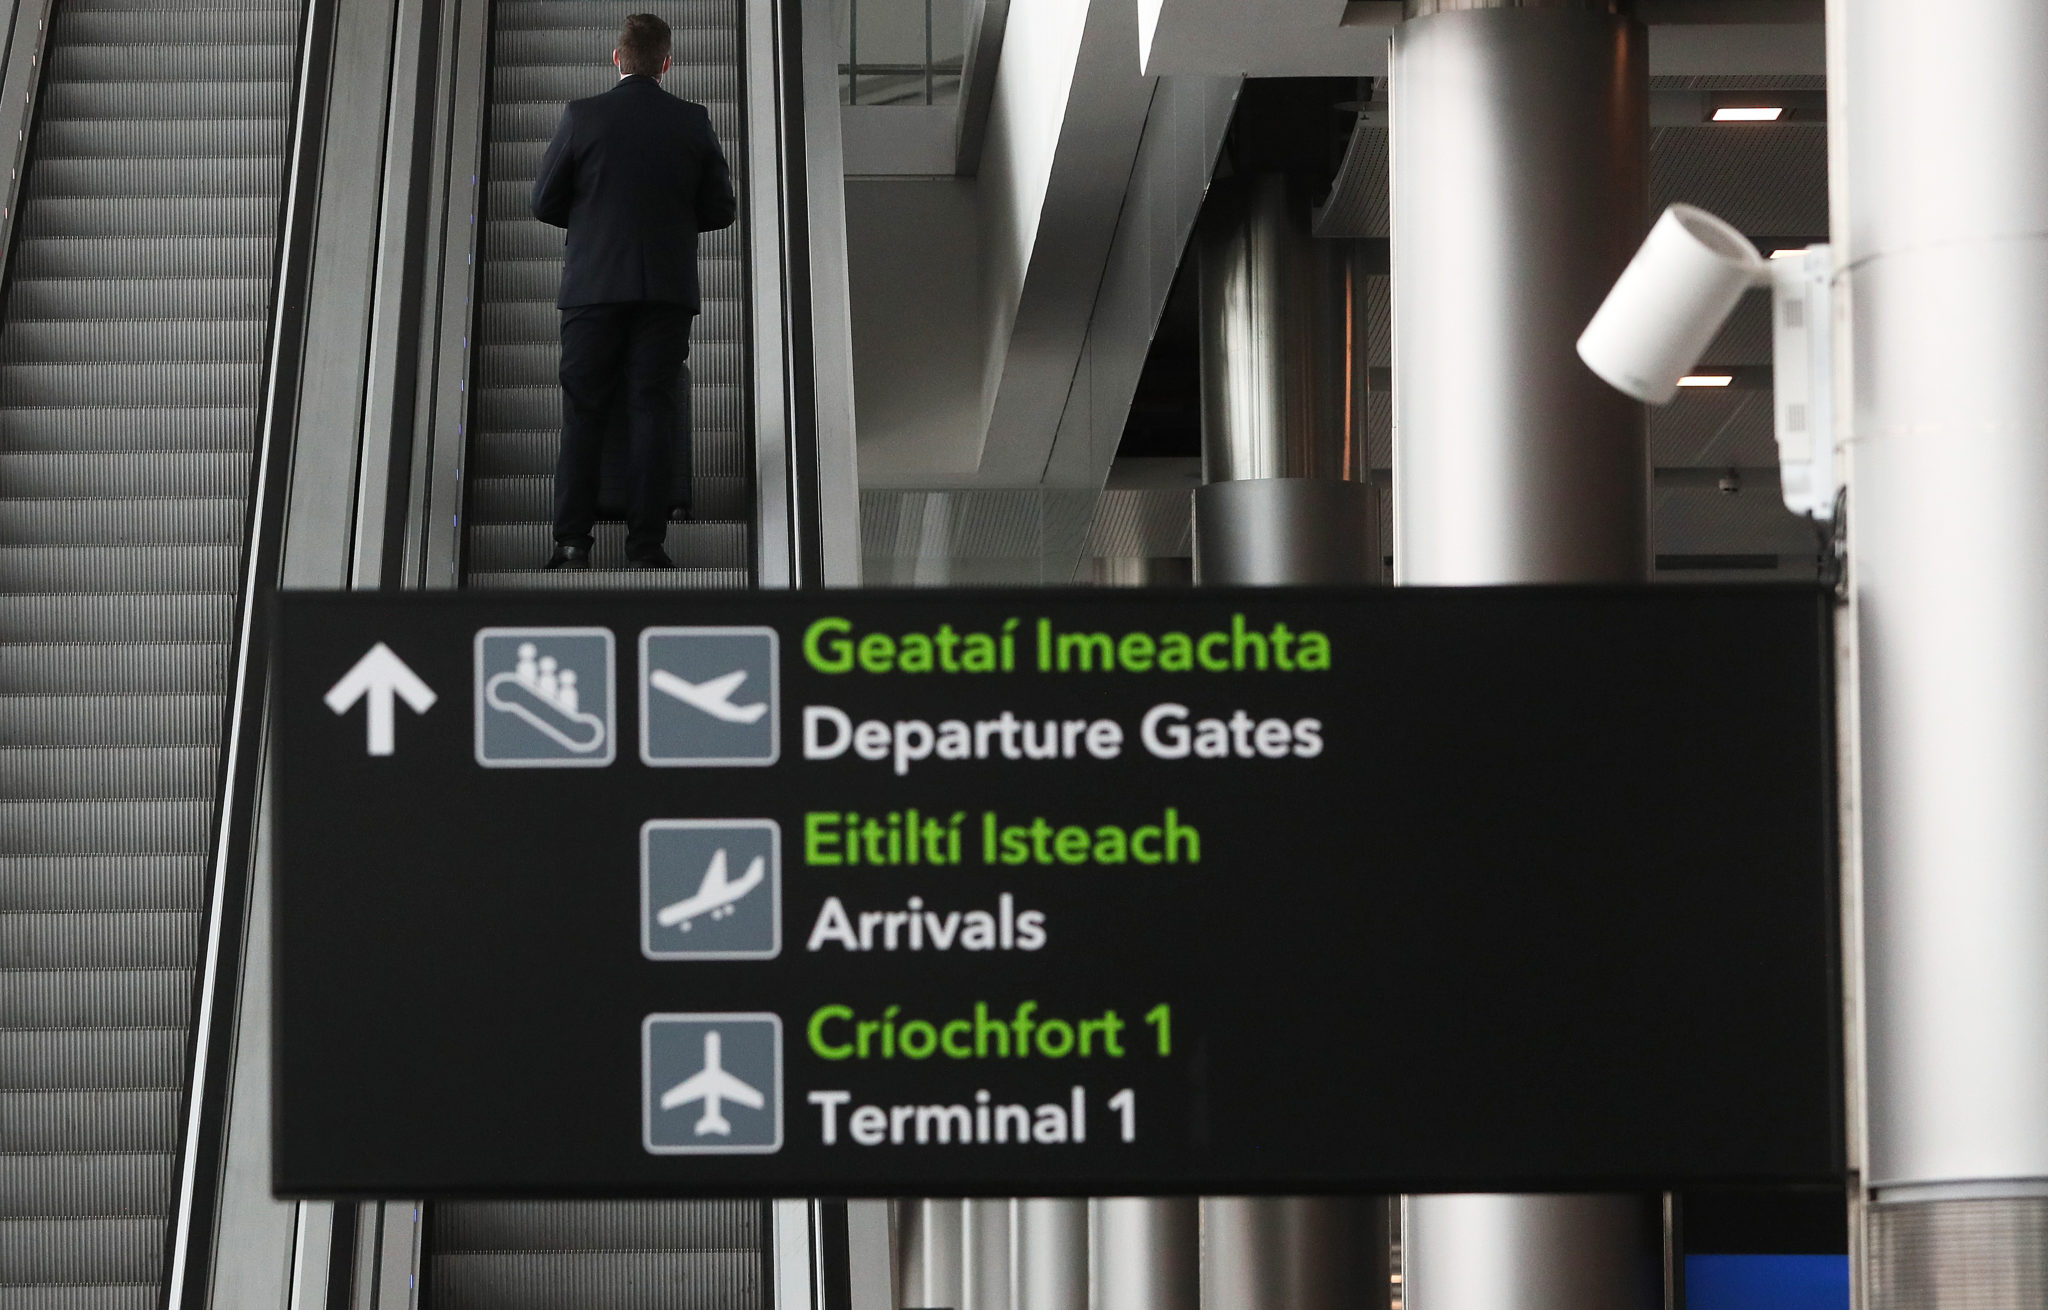 A man goes up an escalator in Terminal 2 at Dublin Airport